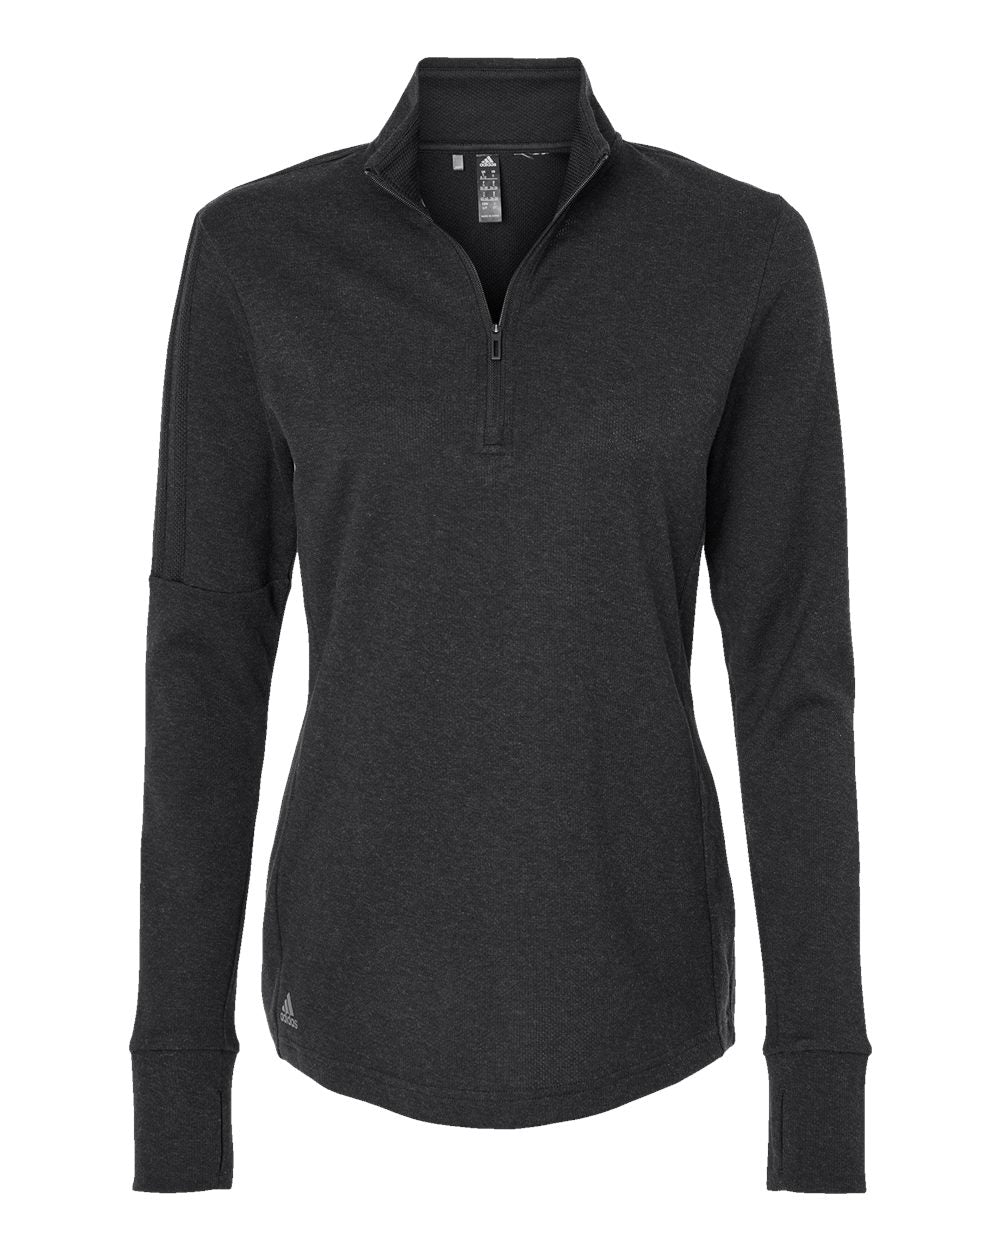 Adidas A555 Women's 3-Stripes Quarter-Zip Sweater #color_Black Melange